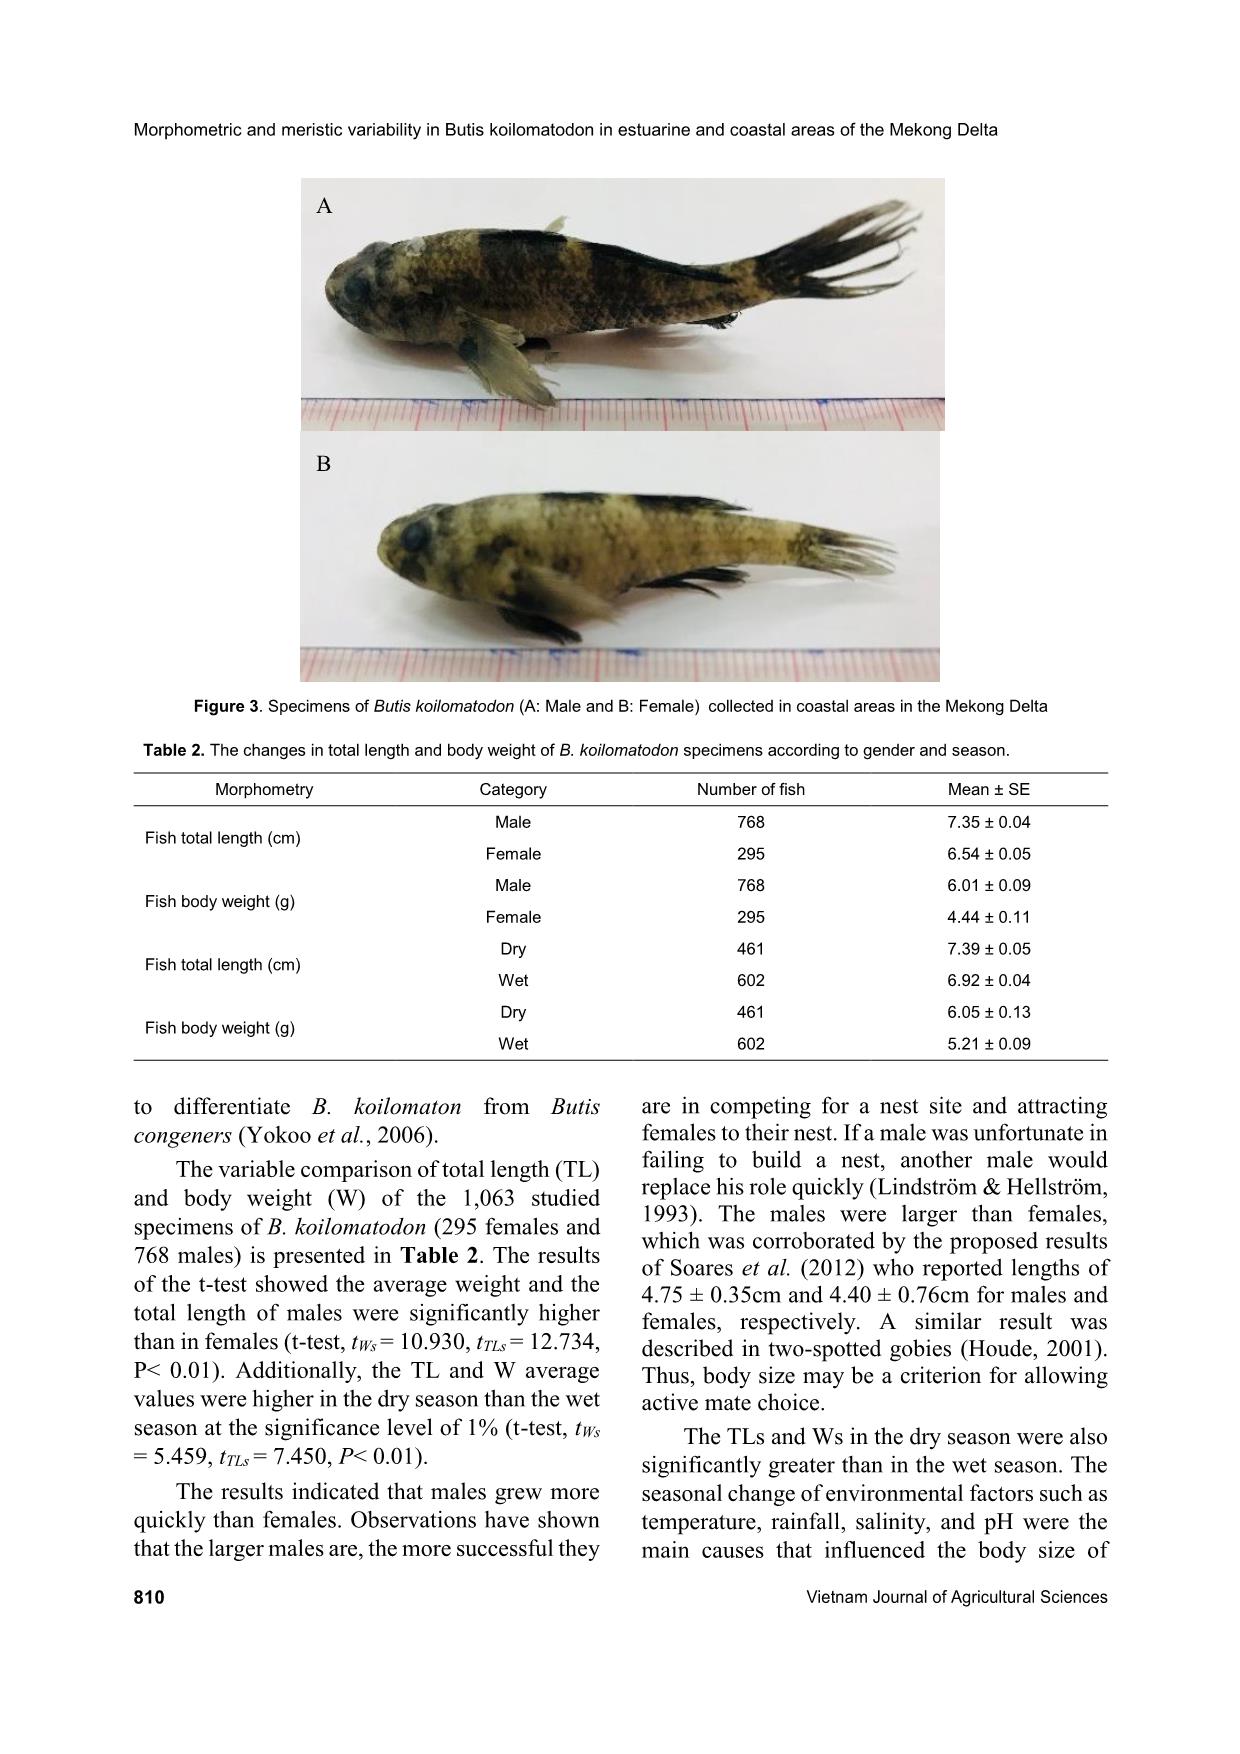 Morphometric and meristic variability in butis koilomatodon (gobiiformes: eleotridae) in estuarine and coastal areas of the Mekong delta trang 5